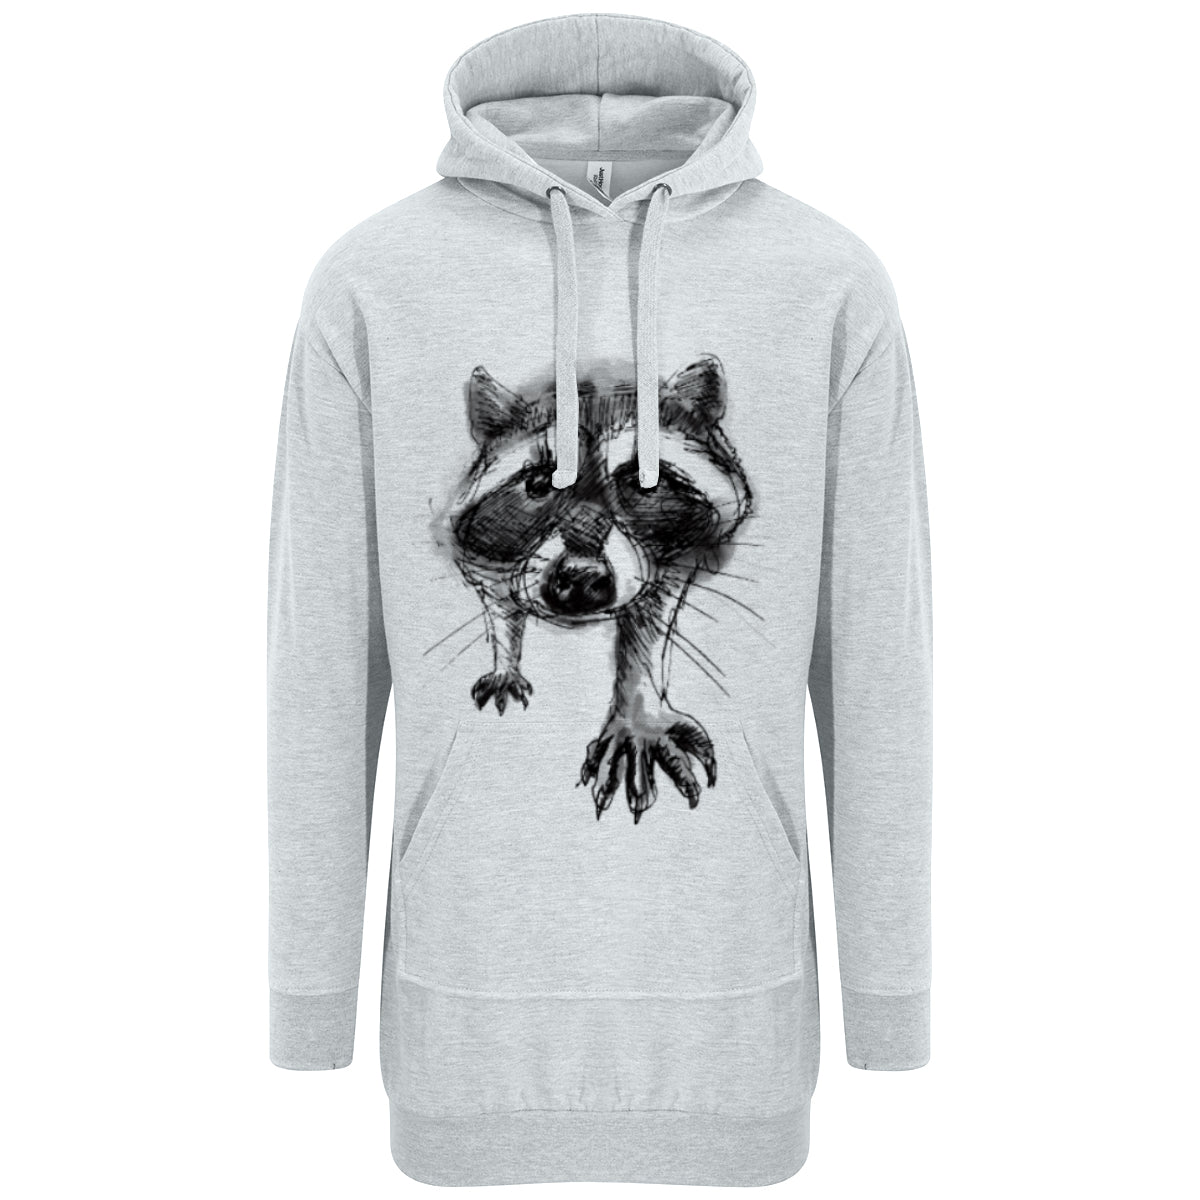 Curious racoon hoodie dress – ARTsy clothing